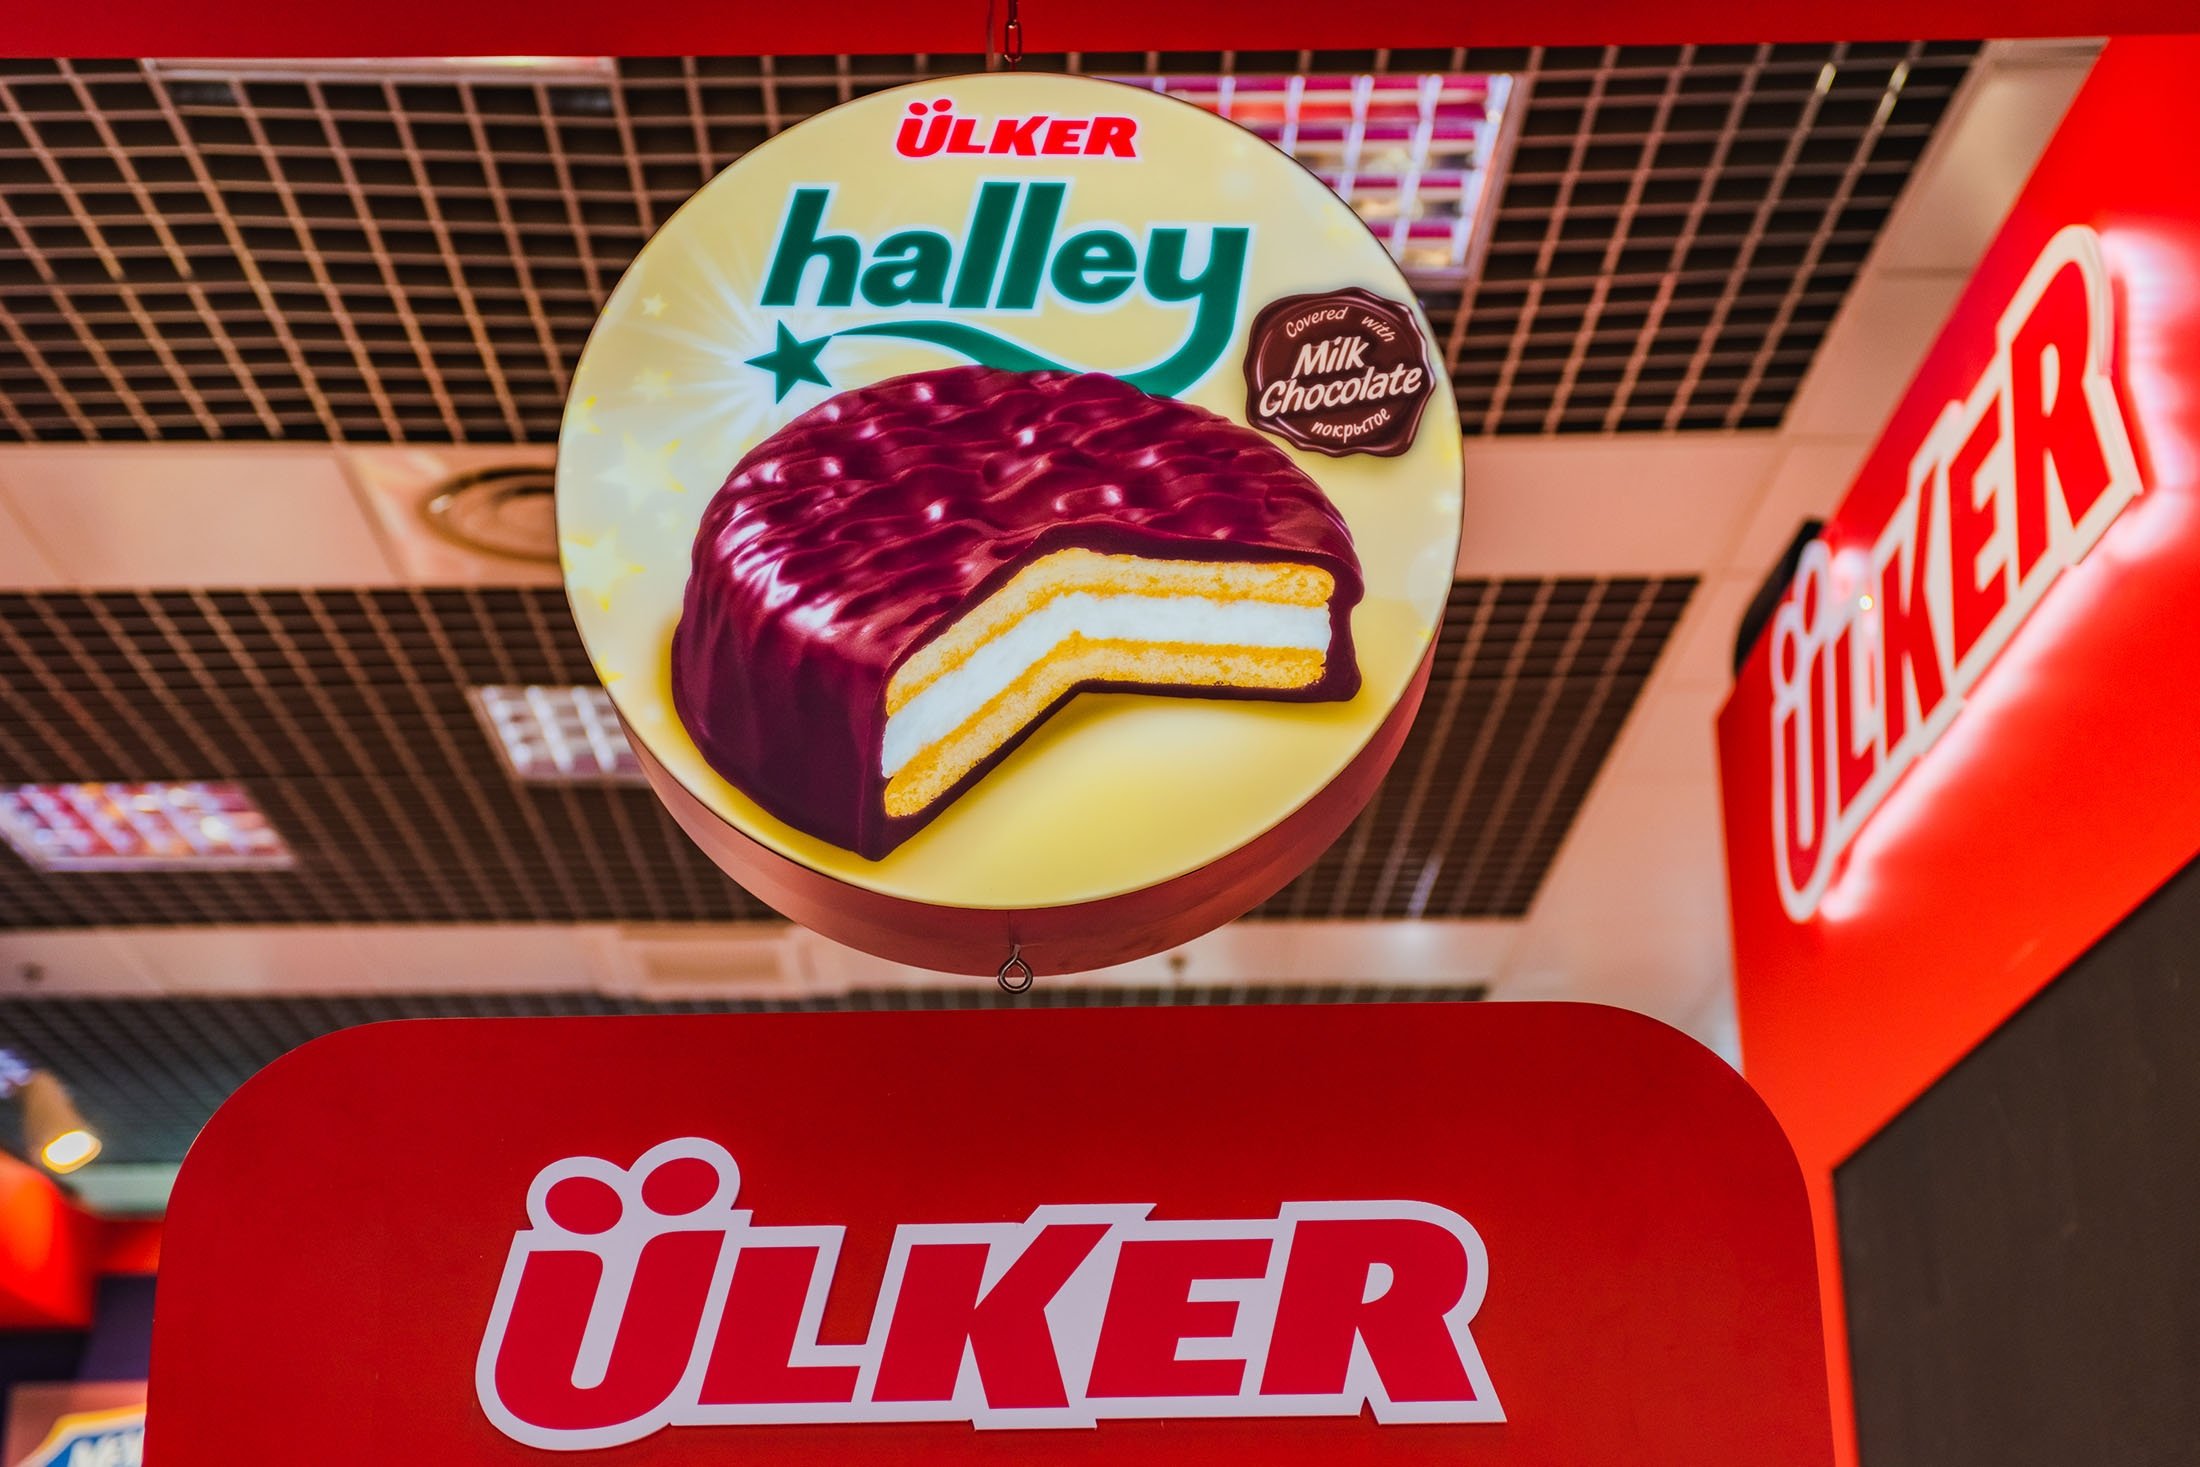 Turkish snack brand Ülker. (Shutterstock Photo)